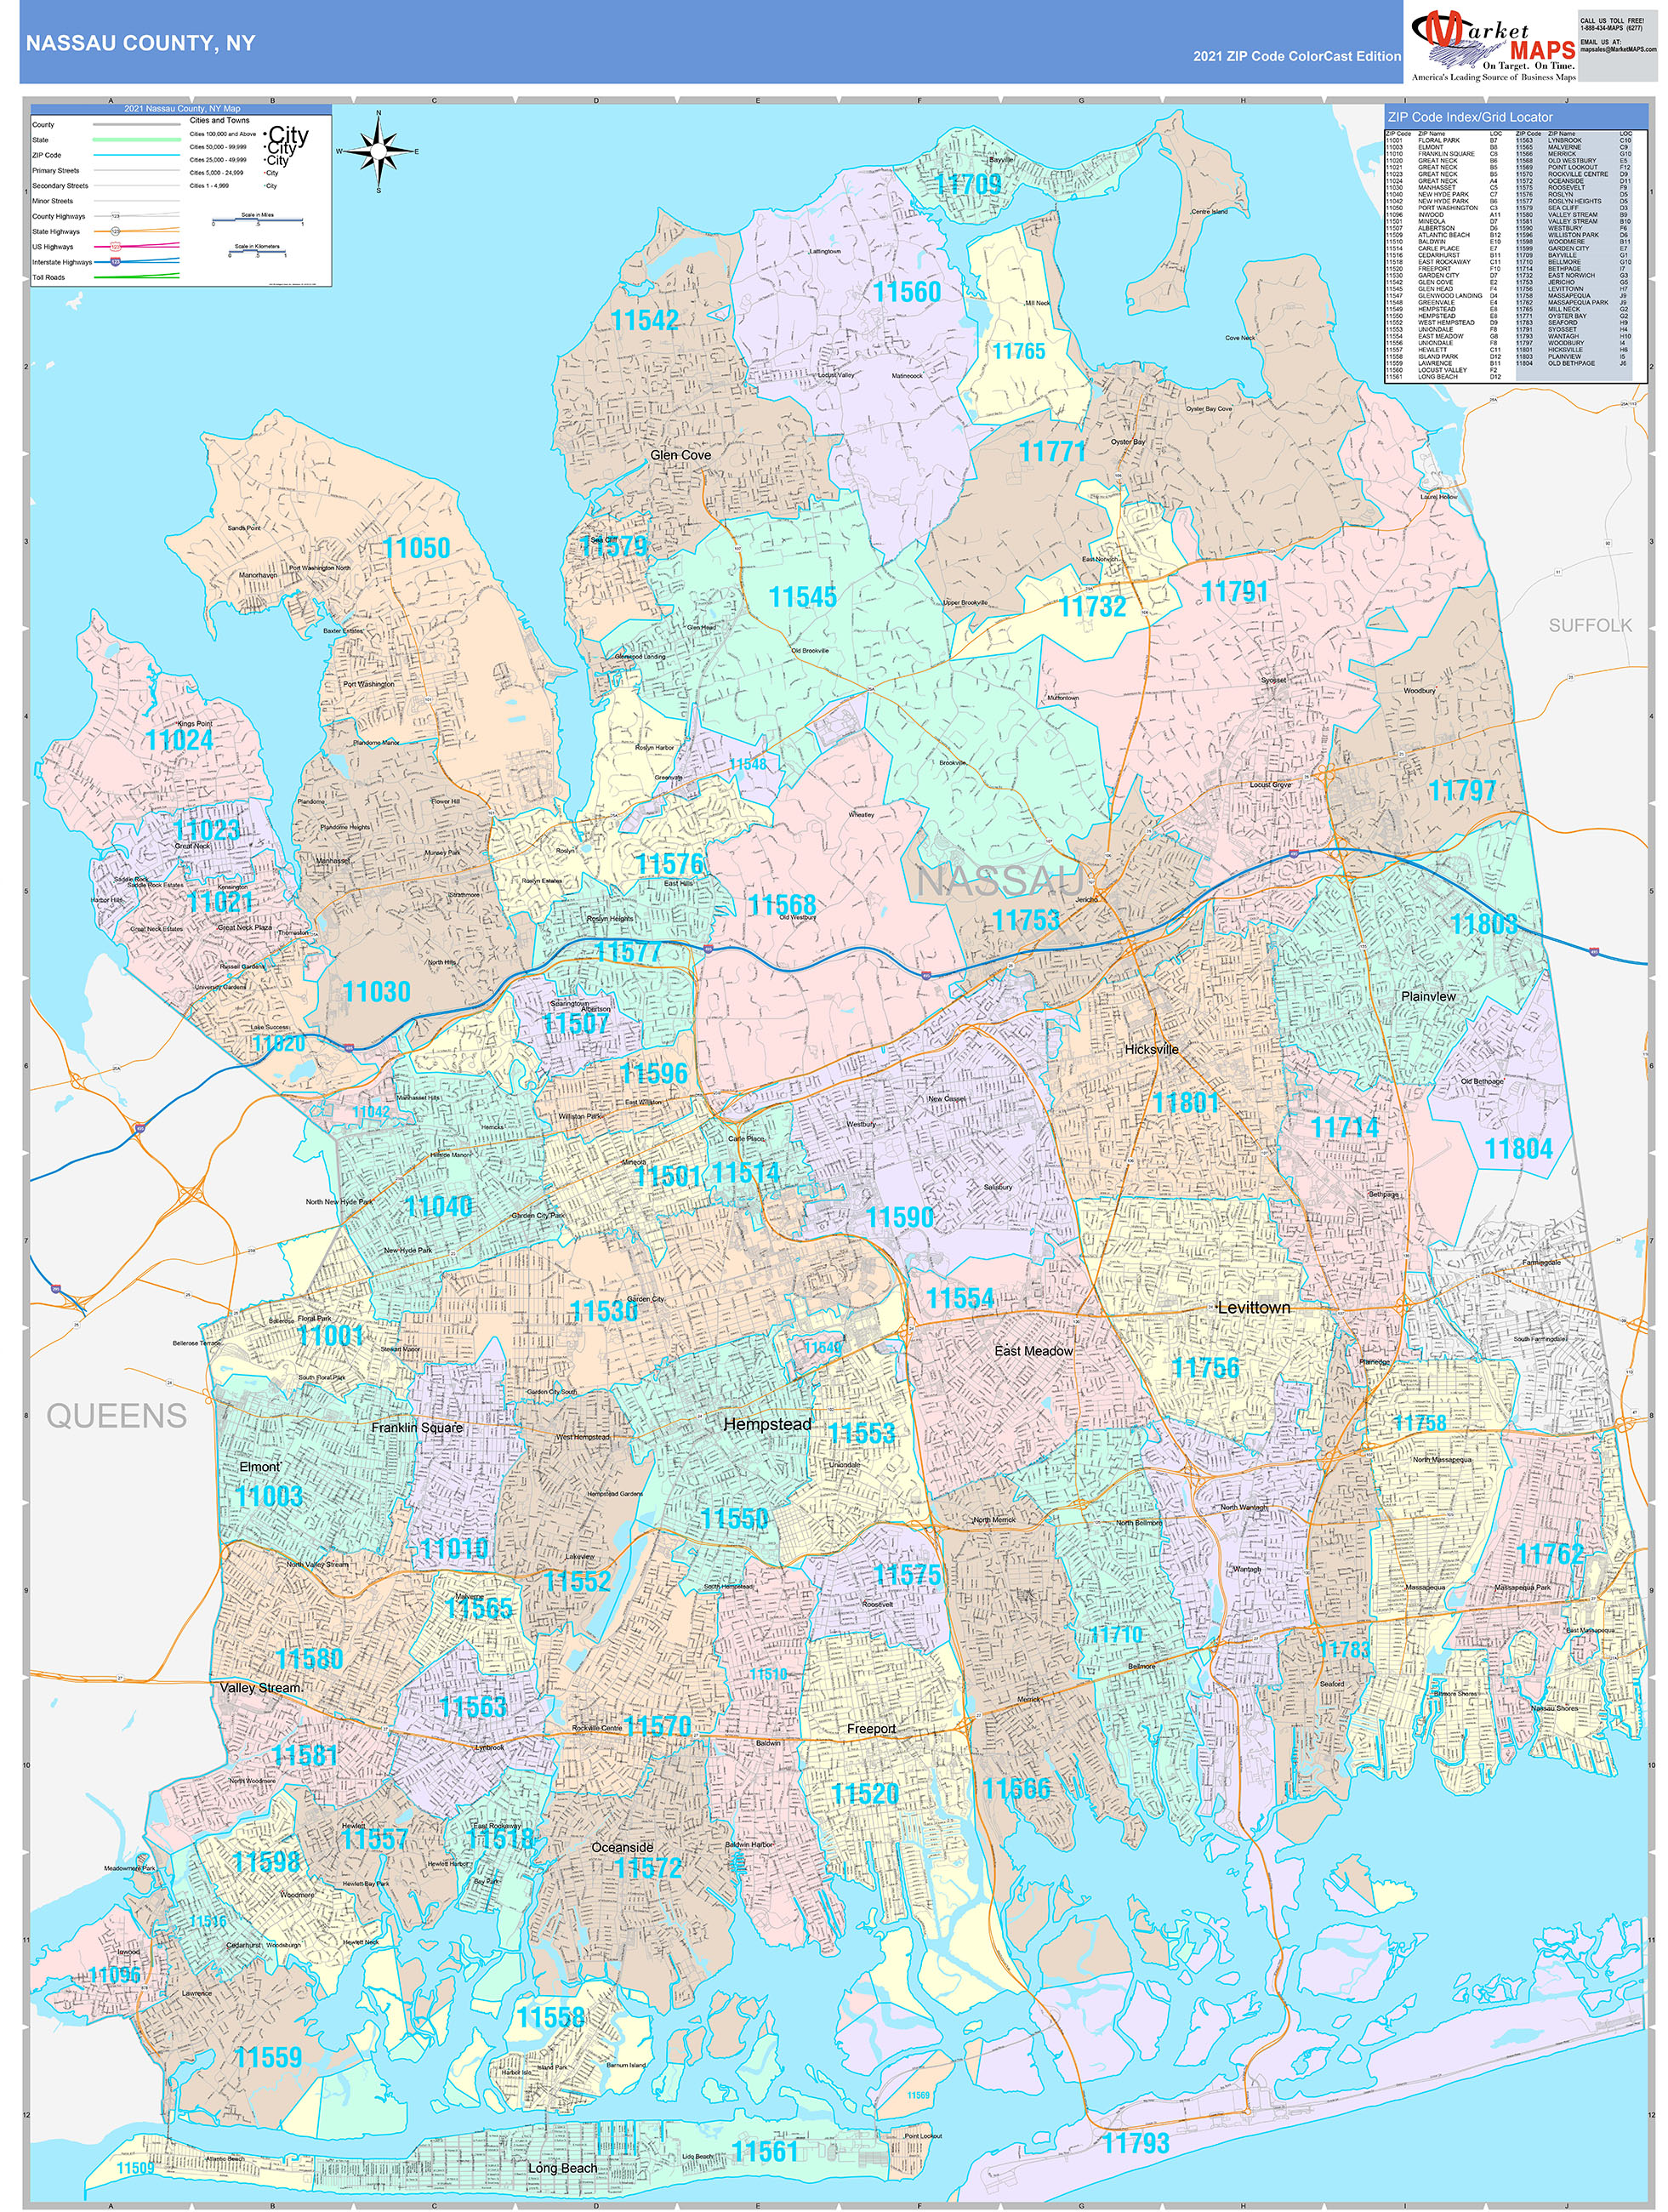 nassau-county-ny-wall-map-color-cast-style-by-marketmaps-mapsales